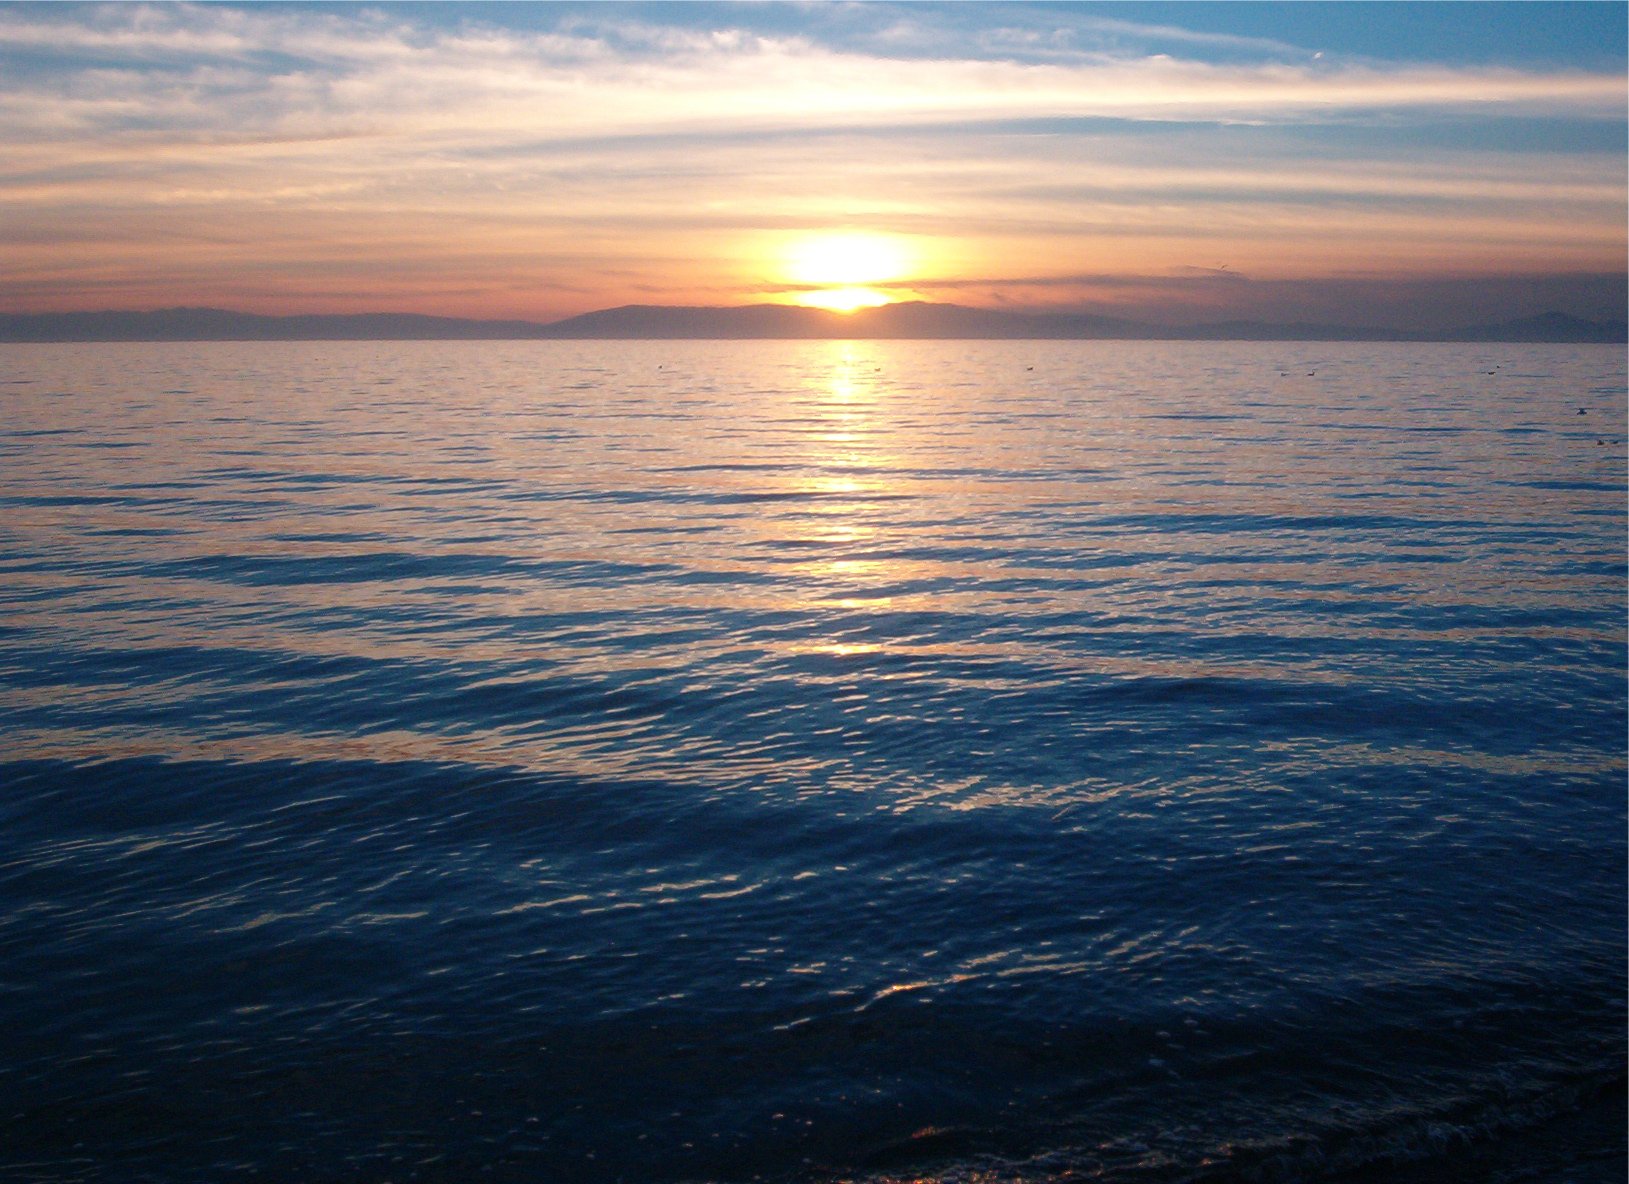 Alameda Ocean Sunset 2 by Falln-Stock on DeviantArt